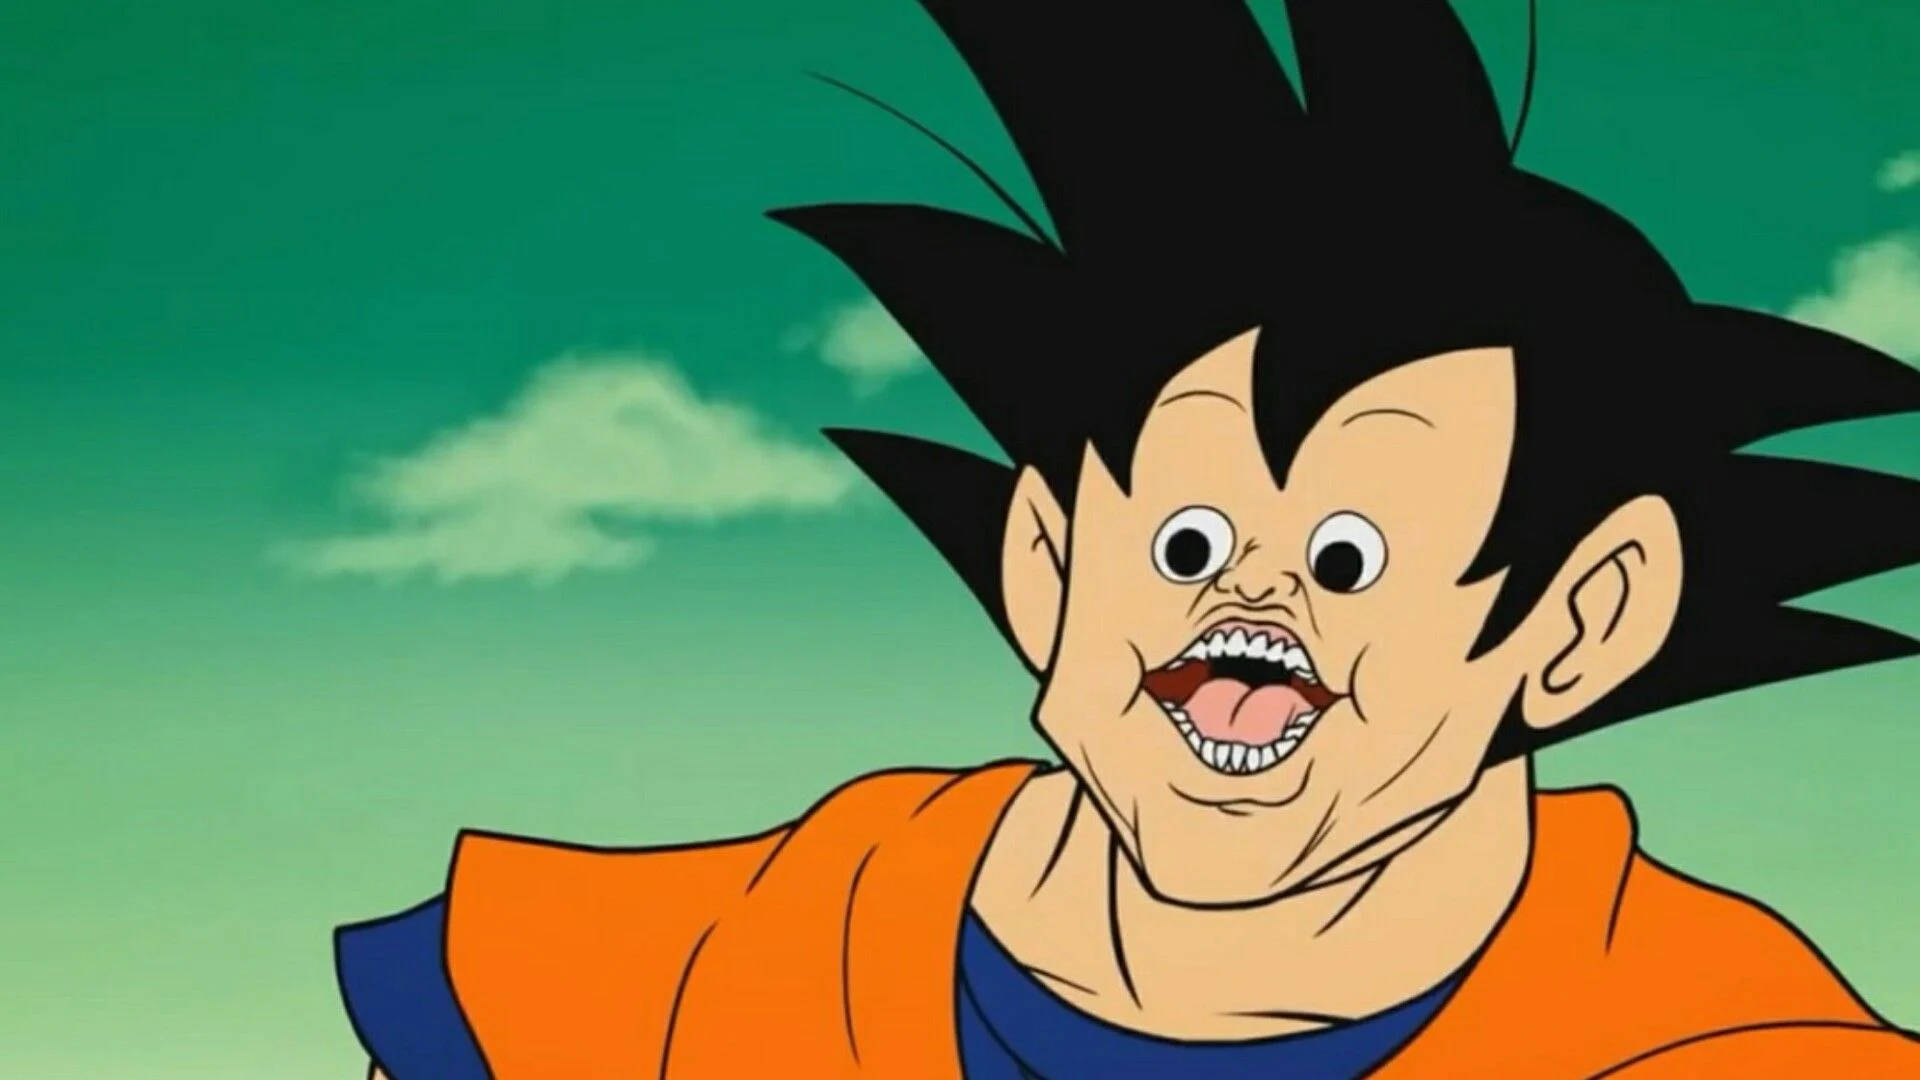 Funny Anime Goku Meme Face Background